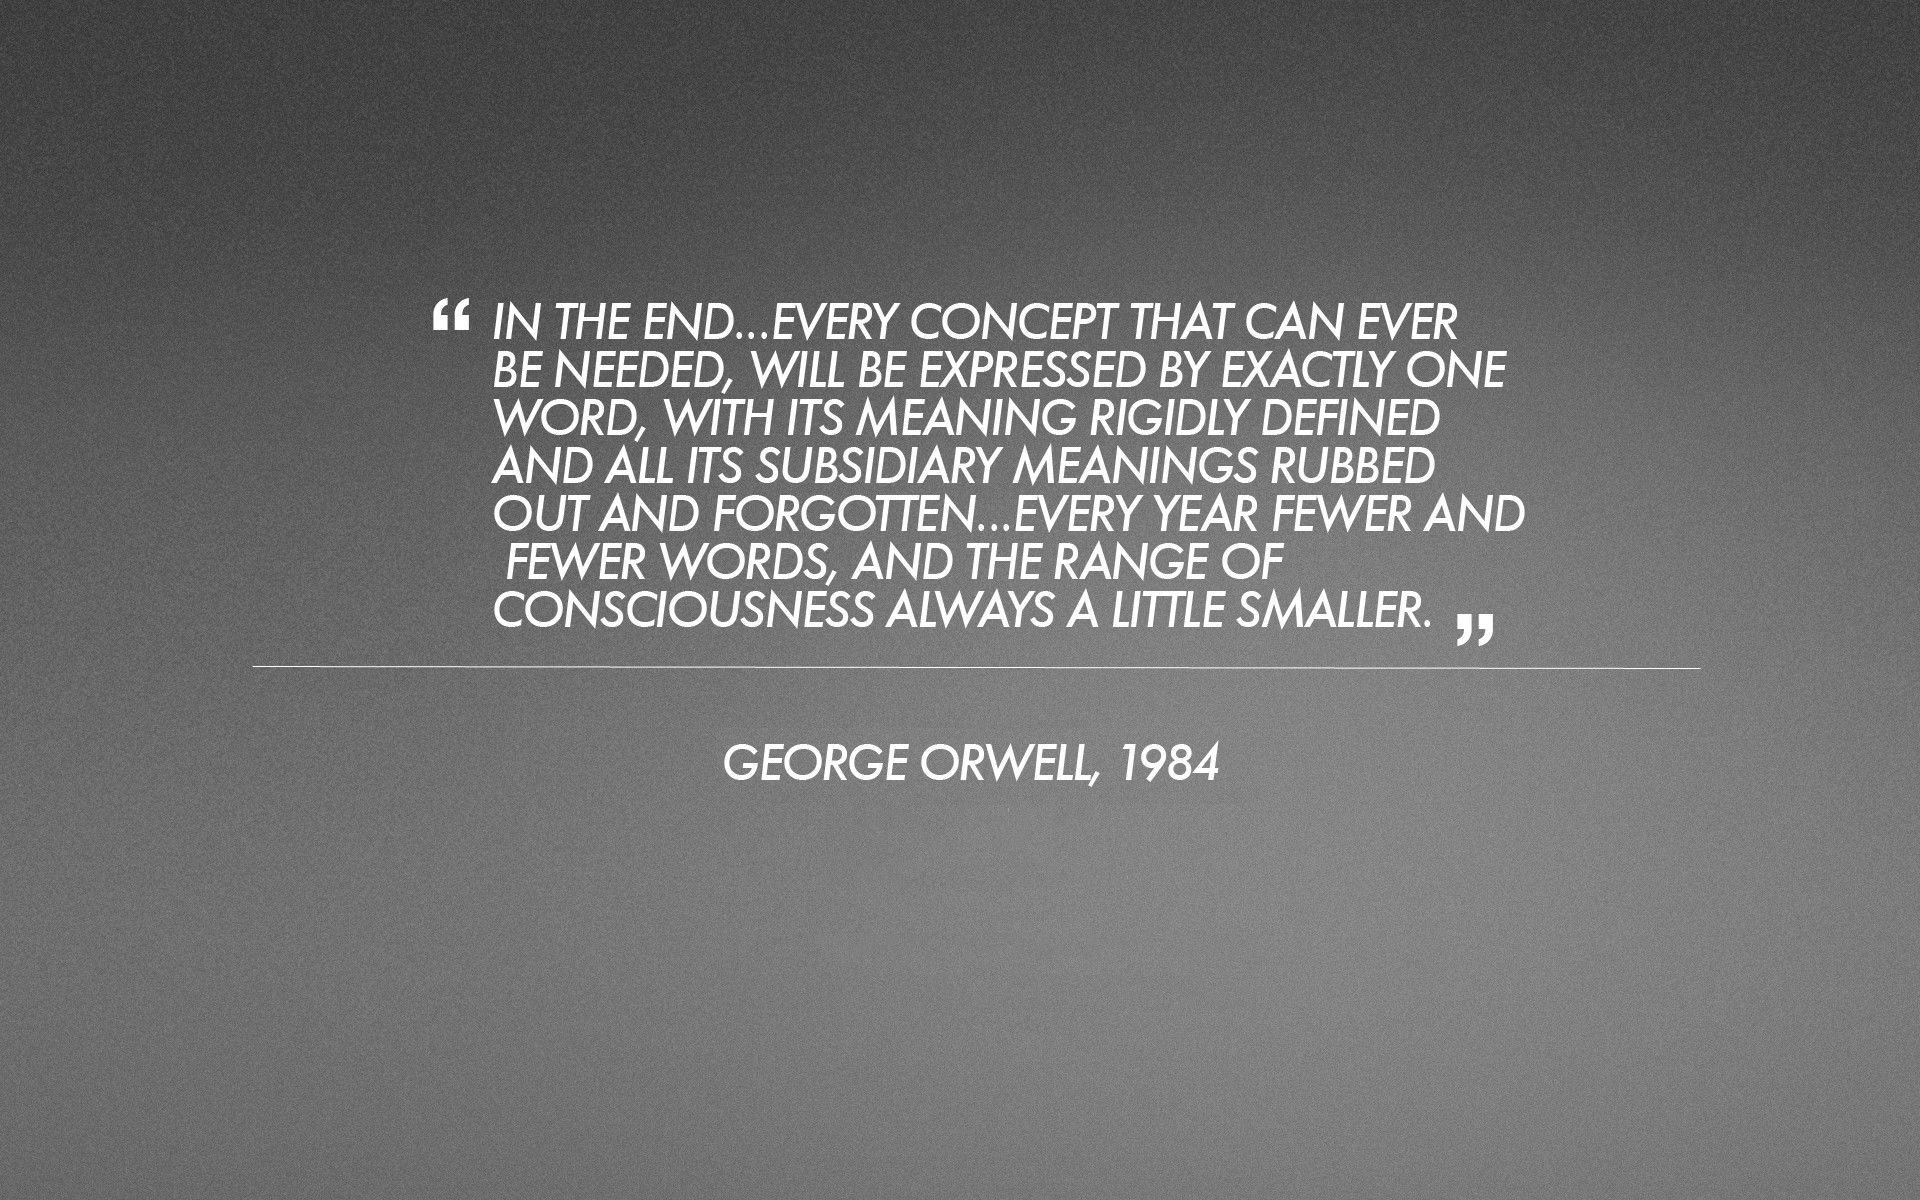 Orwell 1984 quotes.com